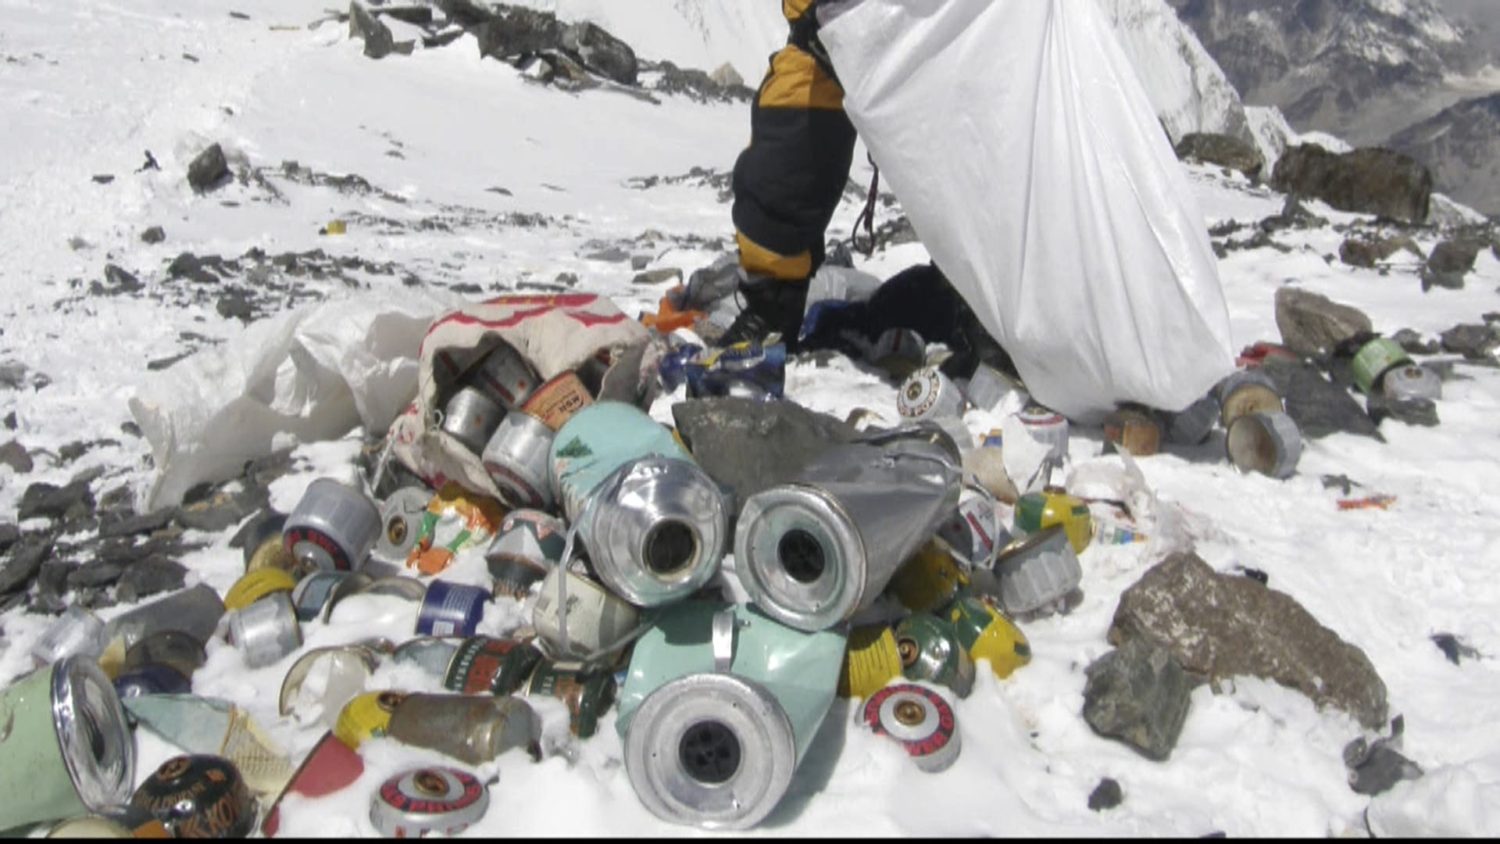 Everest, highest, mountain, himalayas, trash, rubbish, garbage, climbers